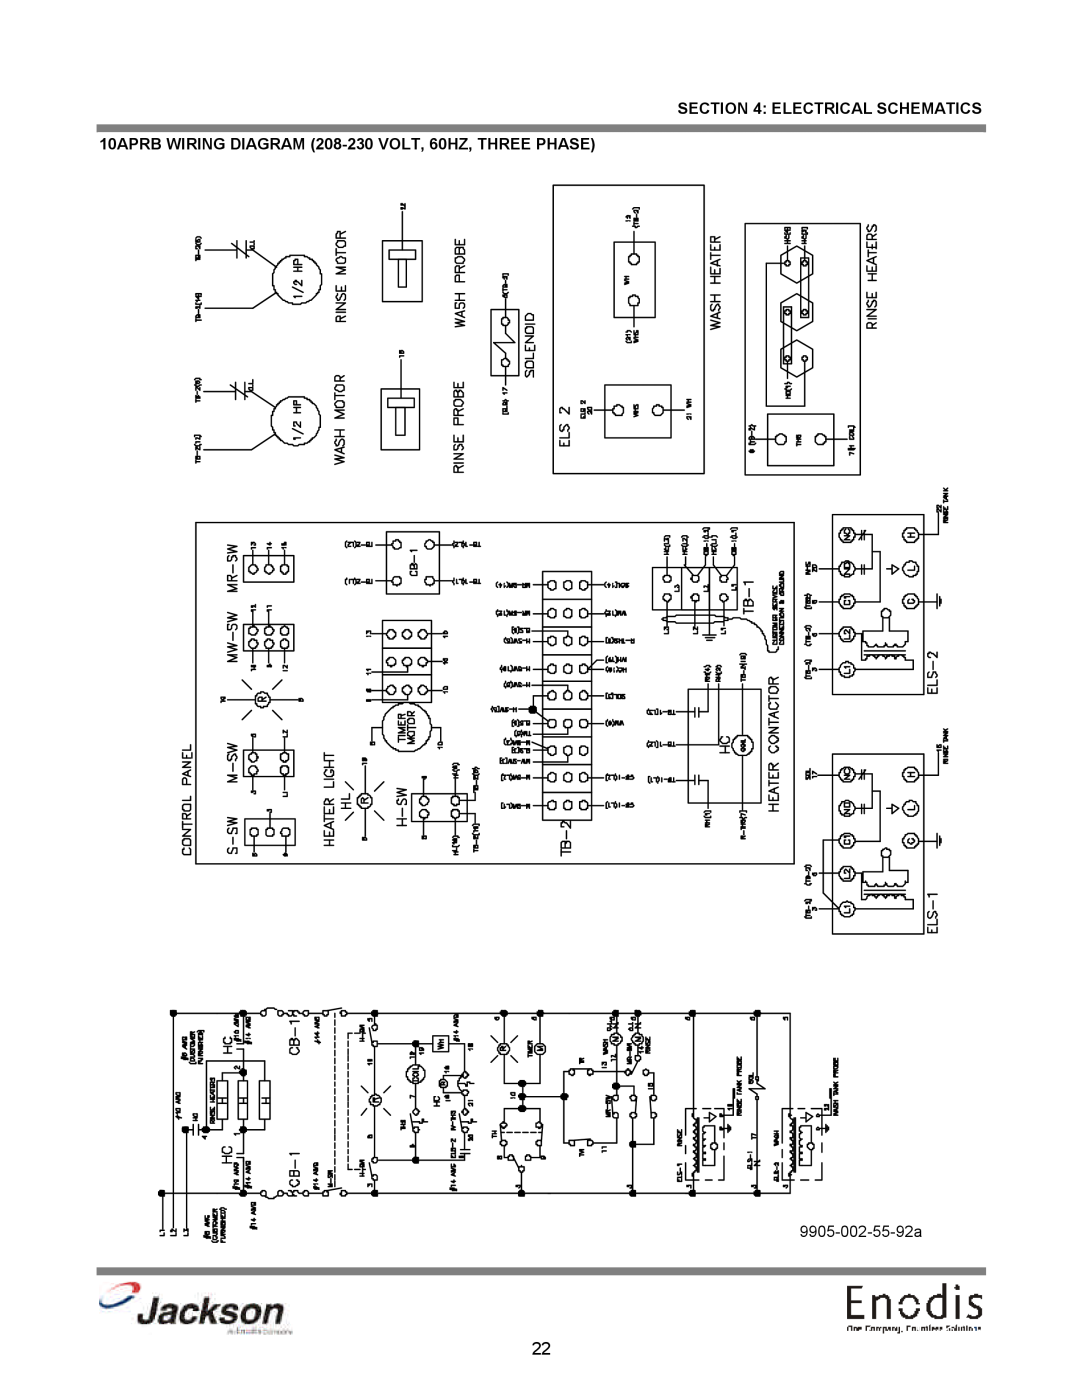 Jackson 10U, 10AB Electrical Schematics, 10APRB WIRING DIAGRAM 208-230 VOLT, 60HZ, THREE PHASE, 9905-002-55-92a 